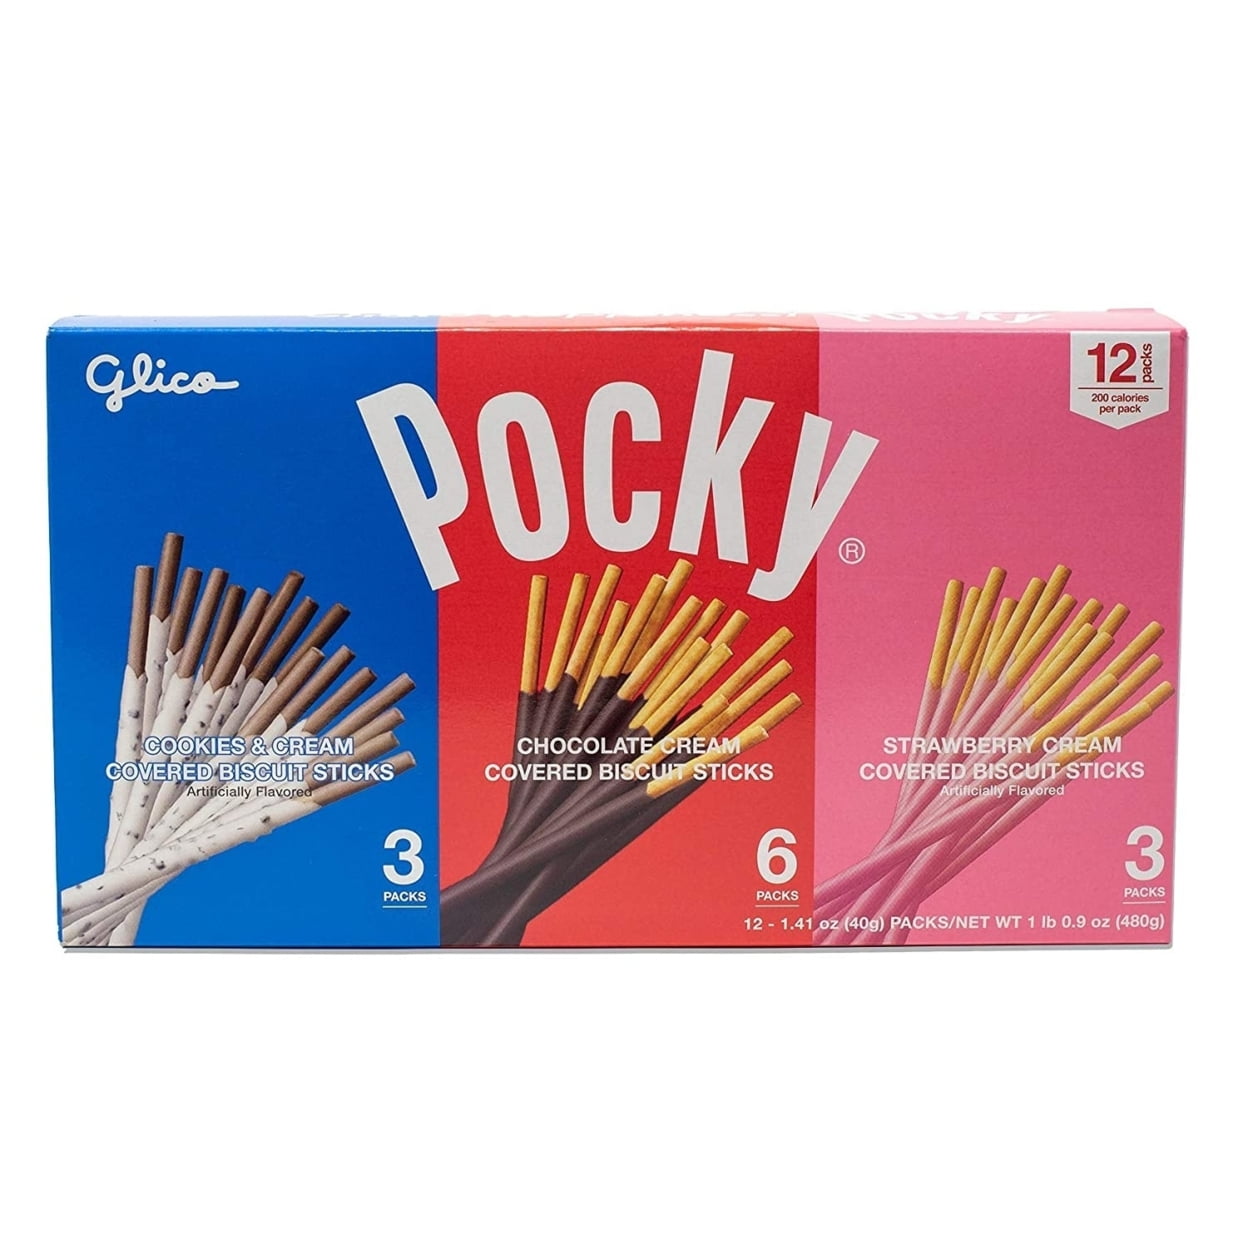 Glico Pocky Sticks - Cookies & Cream 2.47oz - Just Asian Food